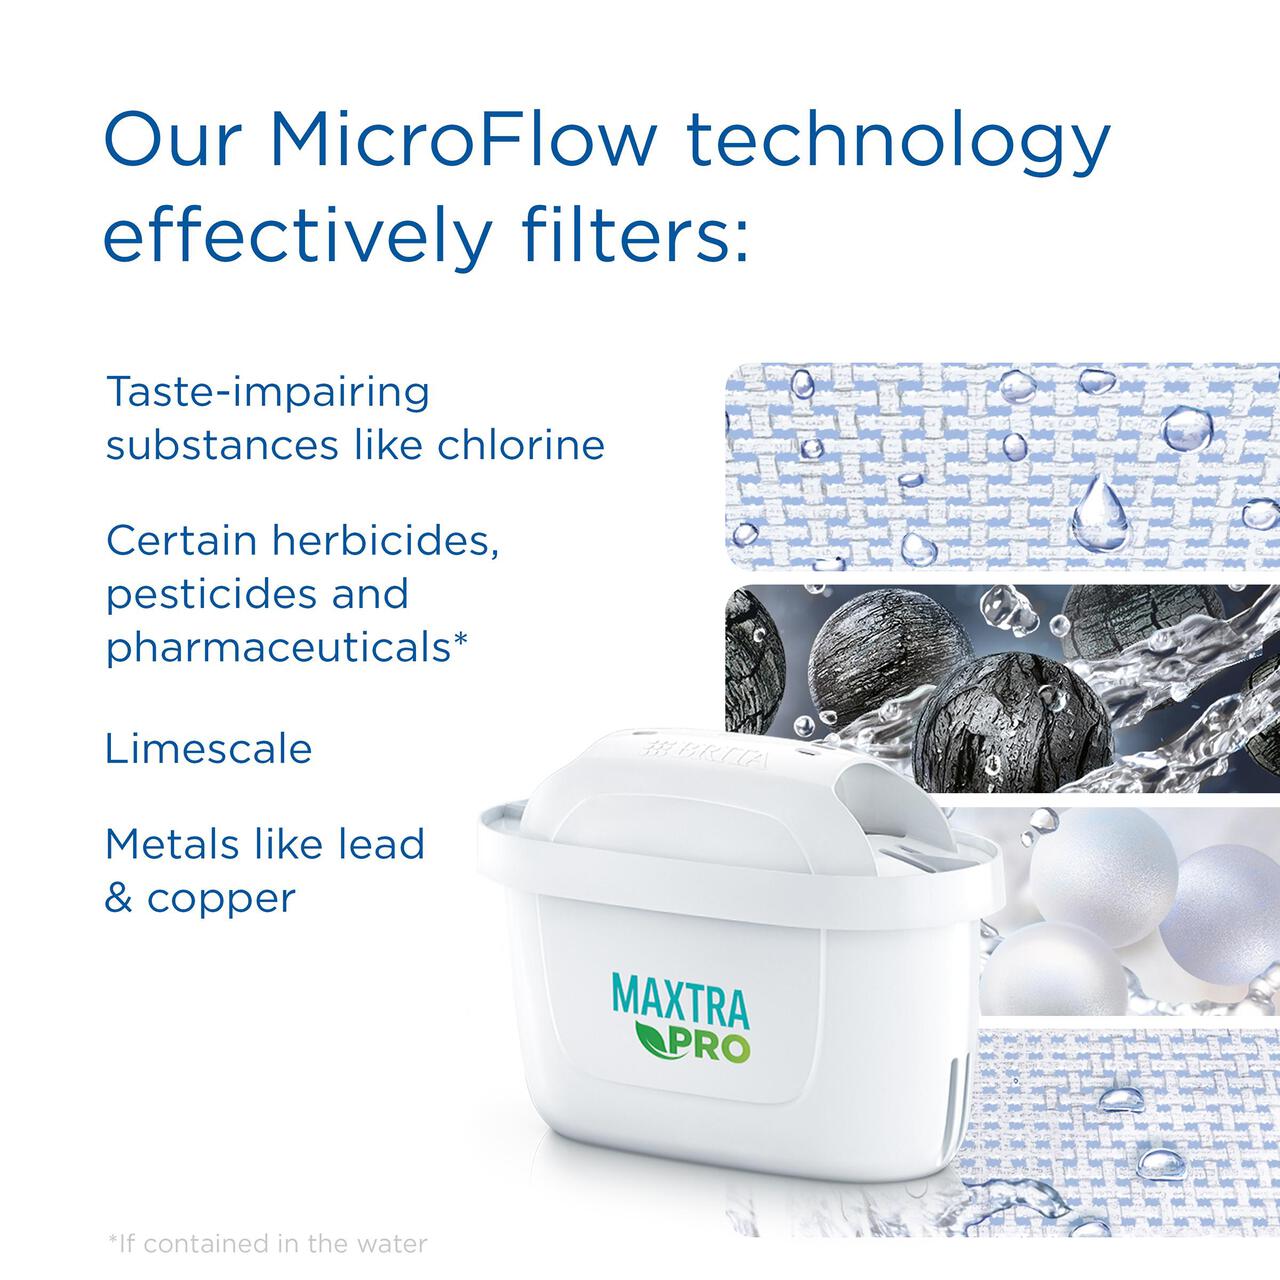 BRITA MAXTRA PRO All-in-1 Water Filter - 3 pack 3 per pack